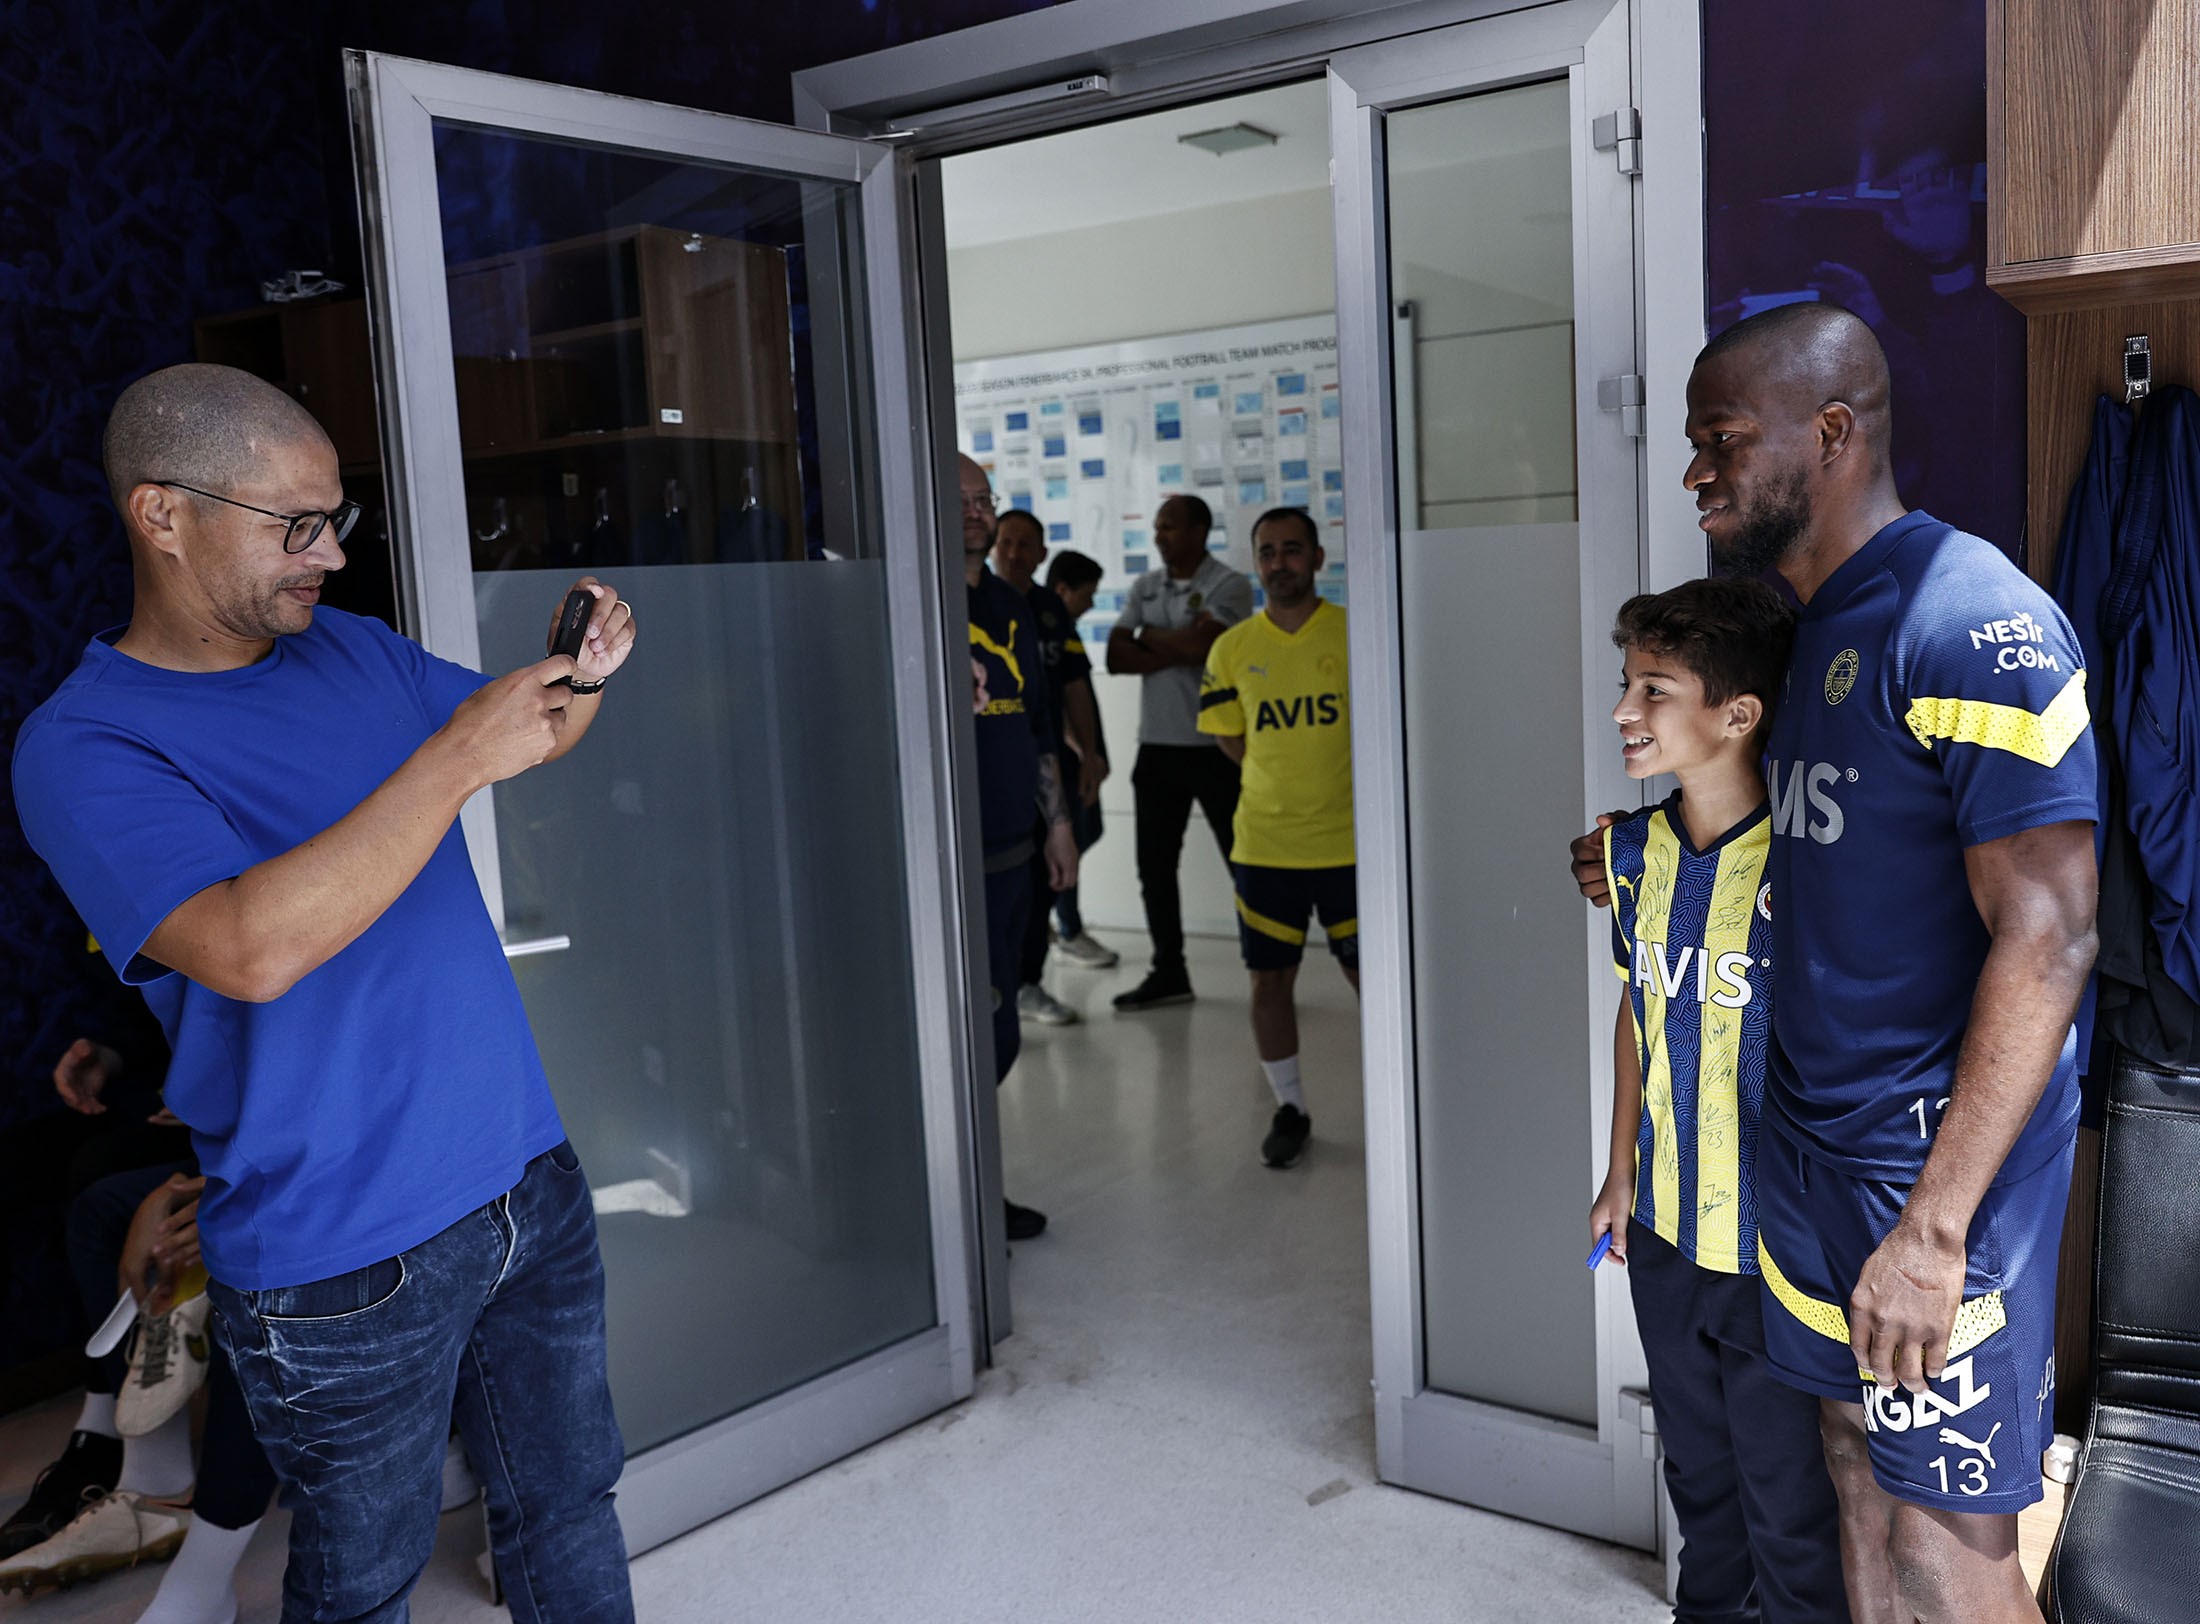 Alex de Souza’dan, Fenerbahçe'ye ziyaret